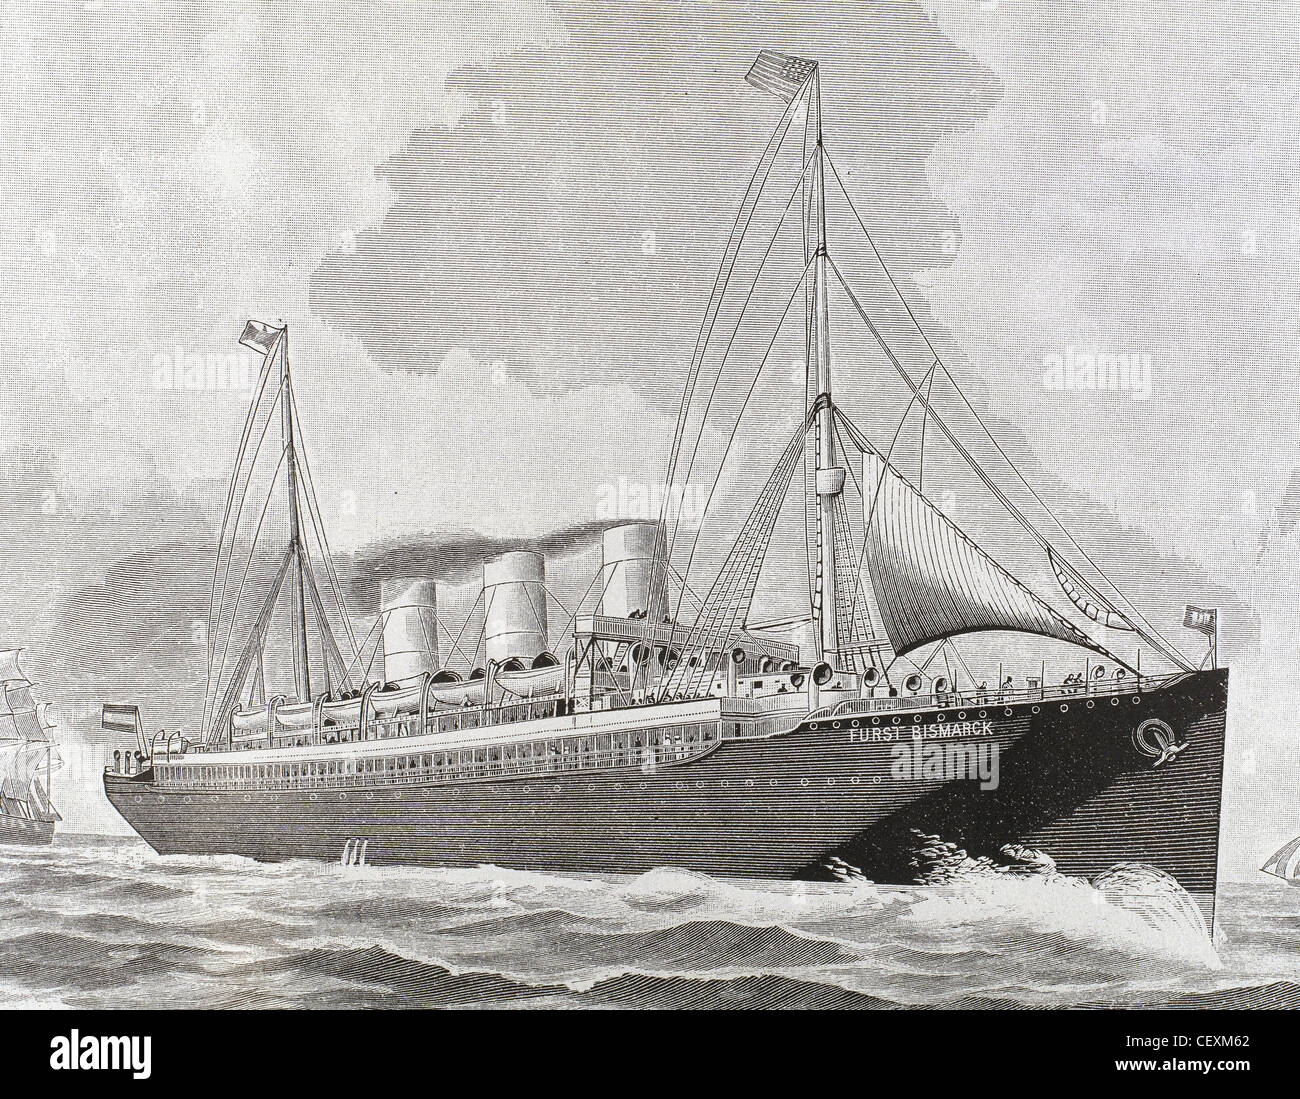 Steamboat Furst Bismarck. Engraving. 19th century. Stock Photo